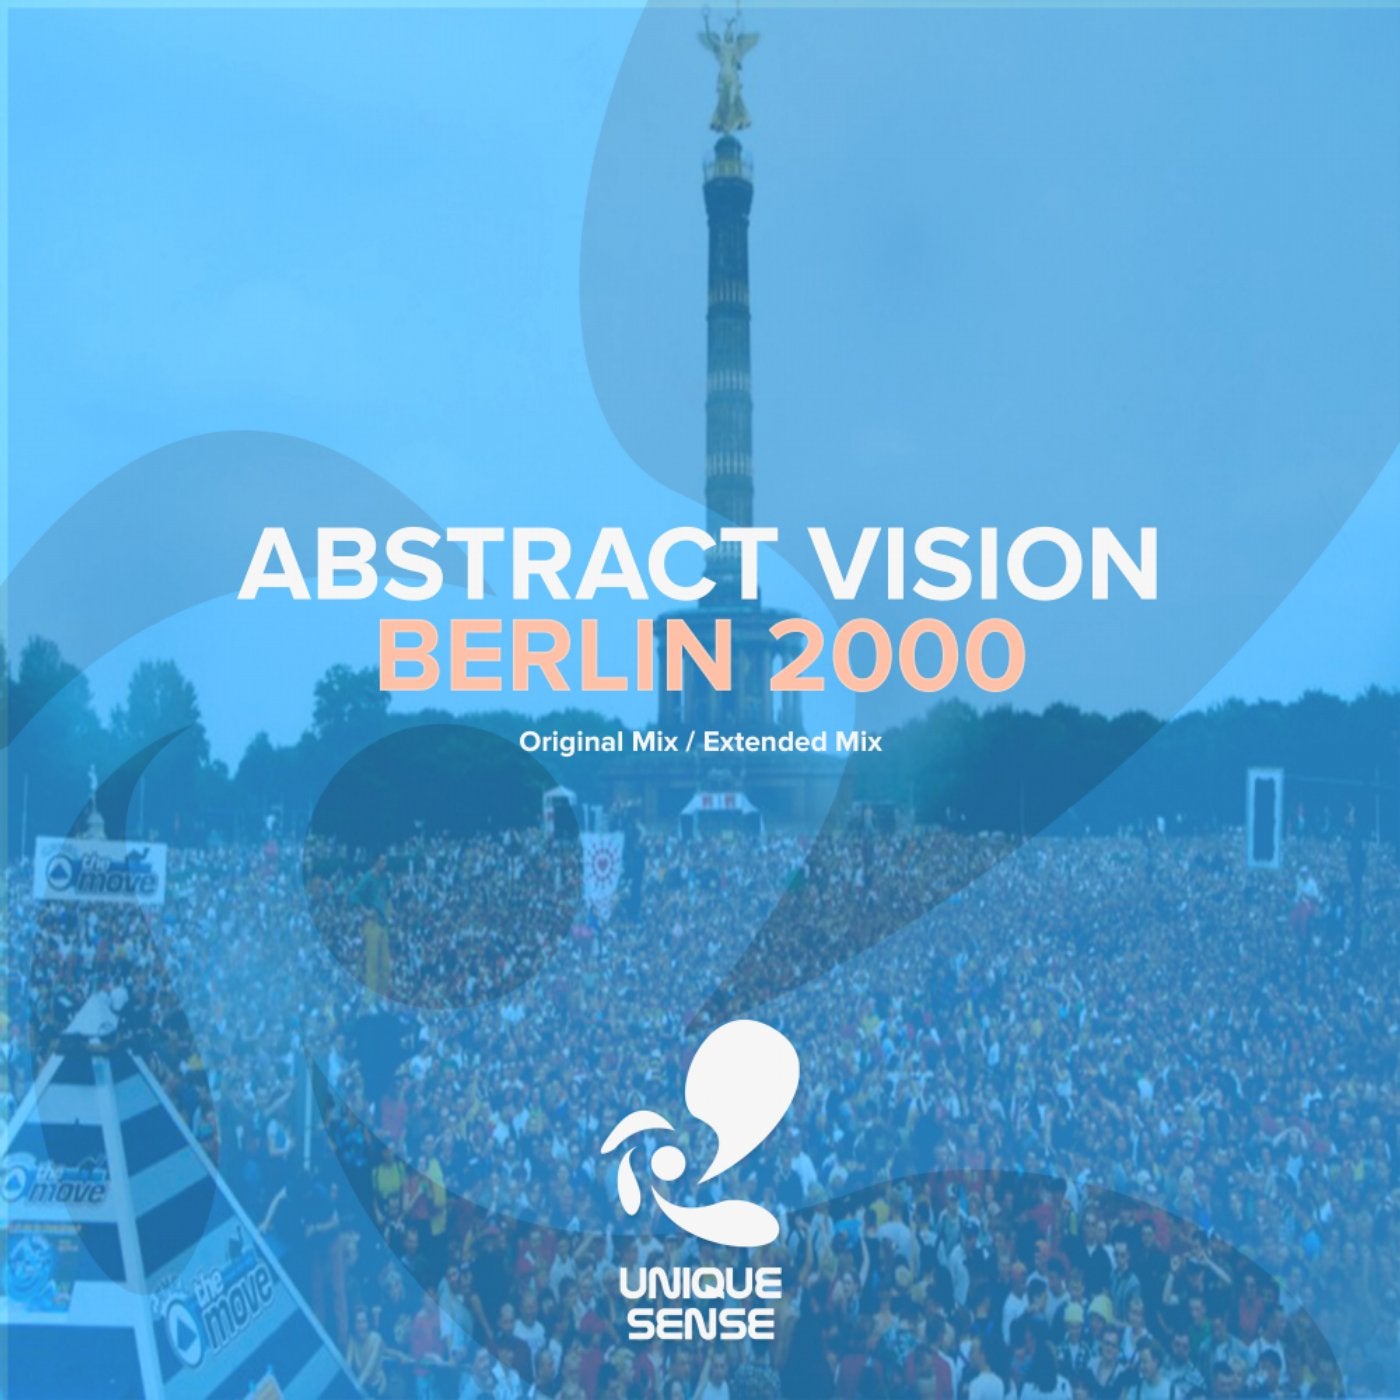 Berlin 2000